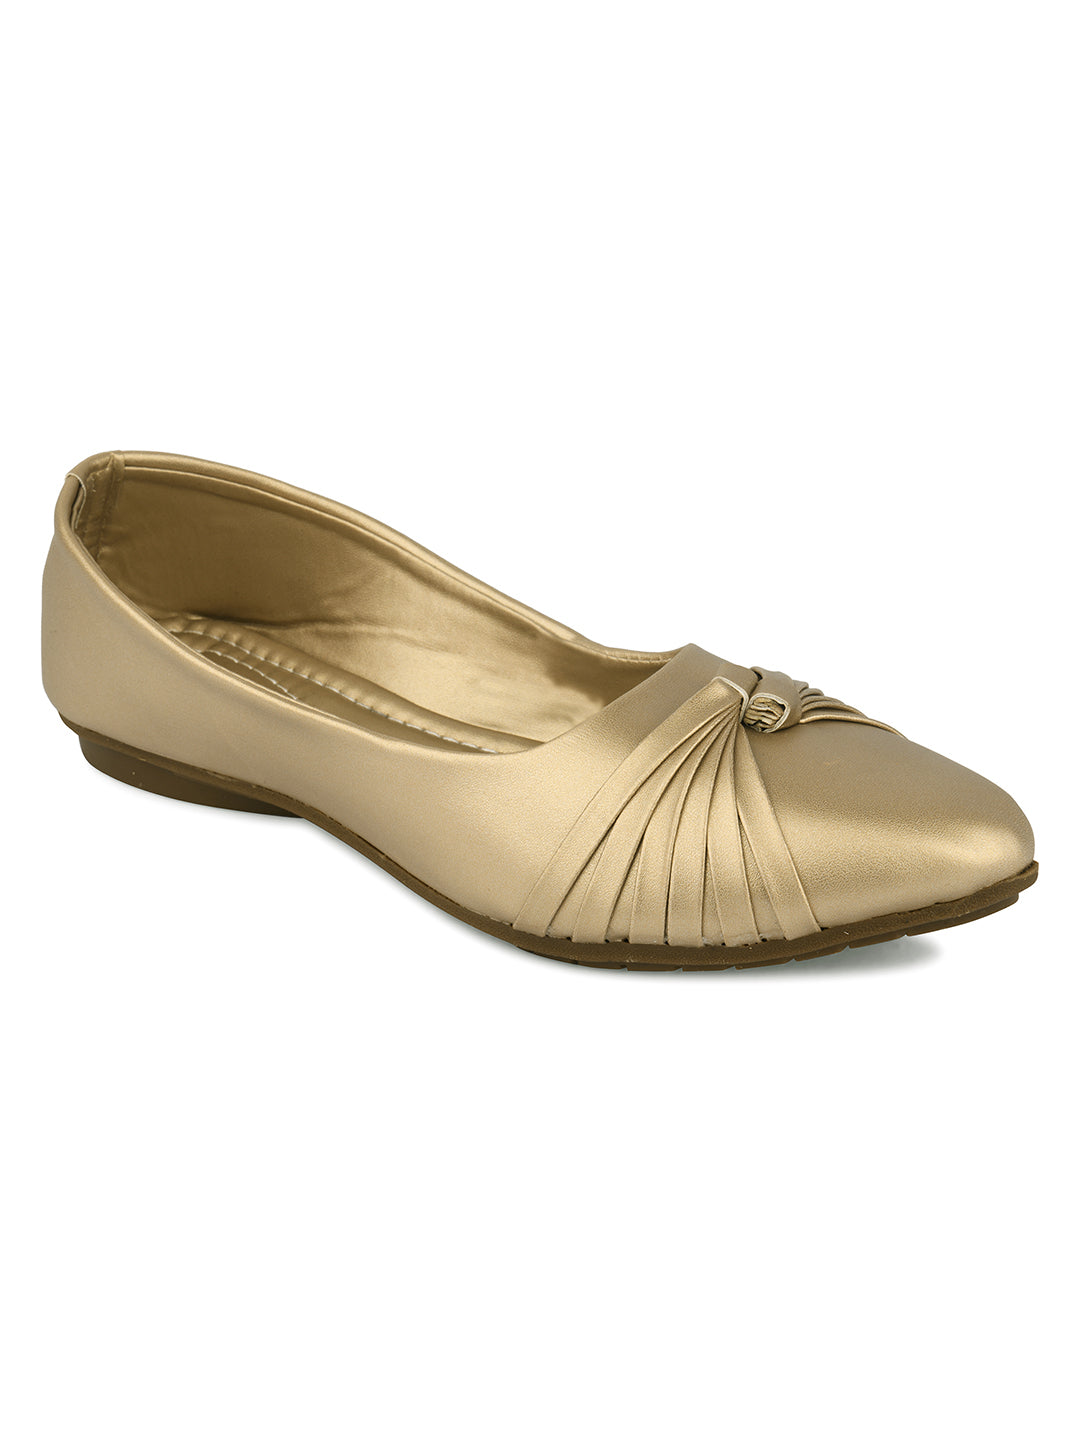 DESI COLOUR Women Gold-Toned Ballerinas with Bows Flats